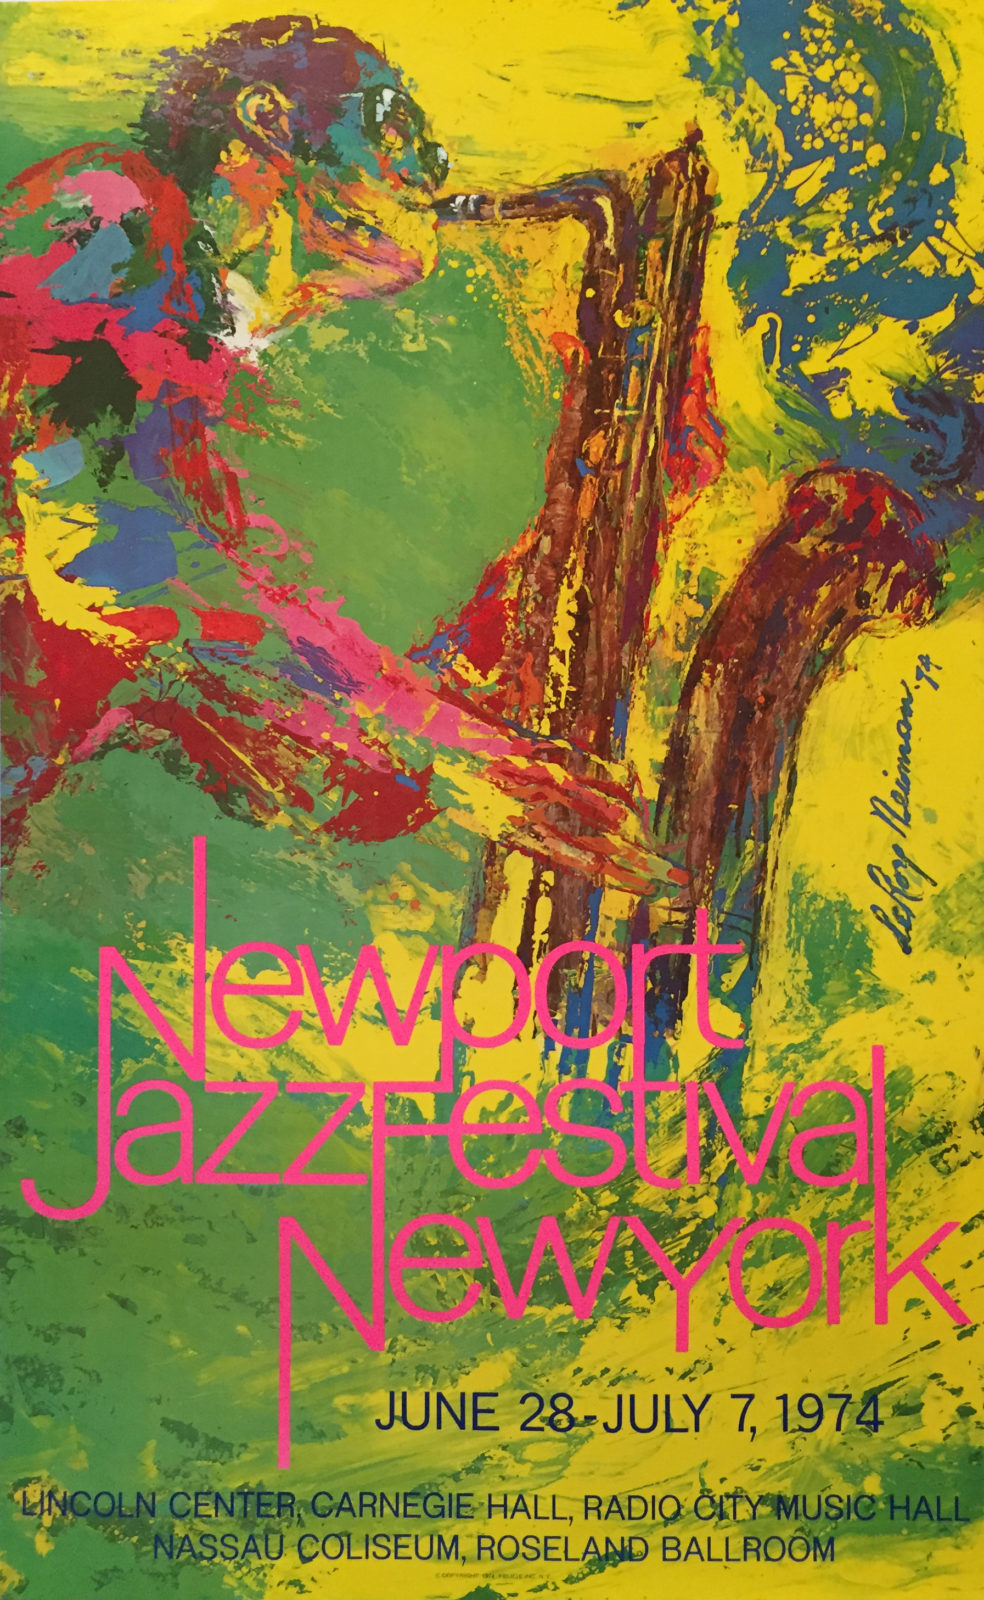 Newport Jazz Festival, New York – LeRoy Neiman